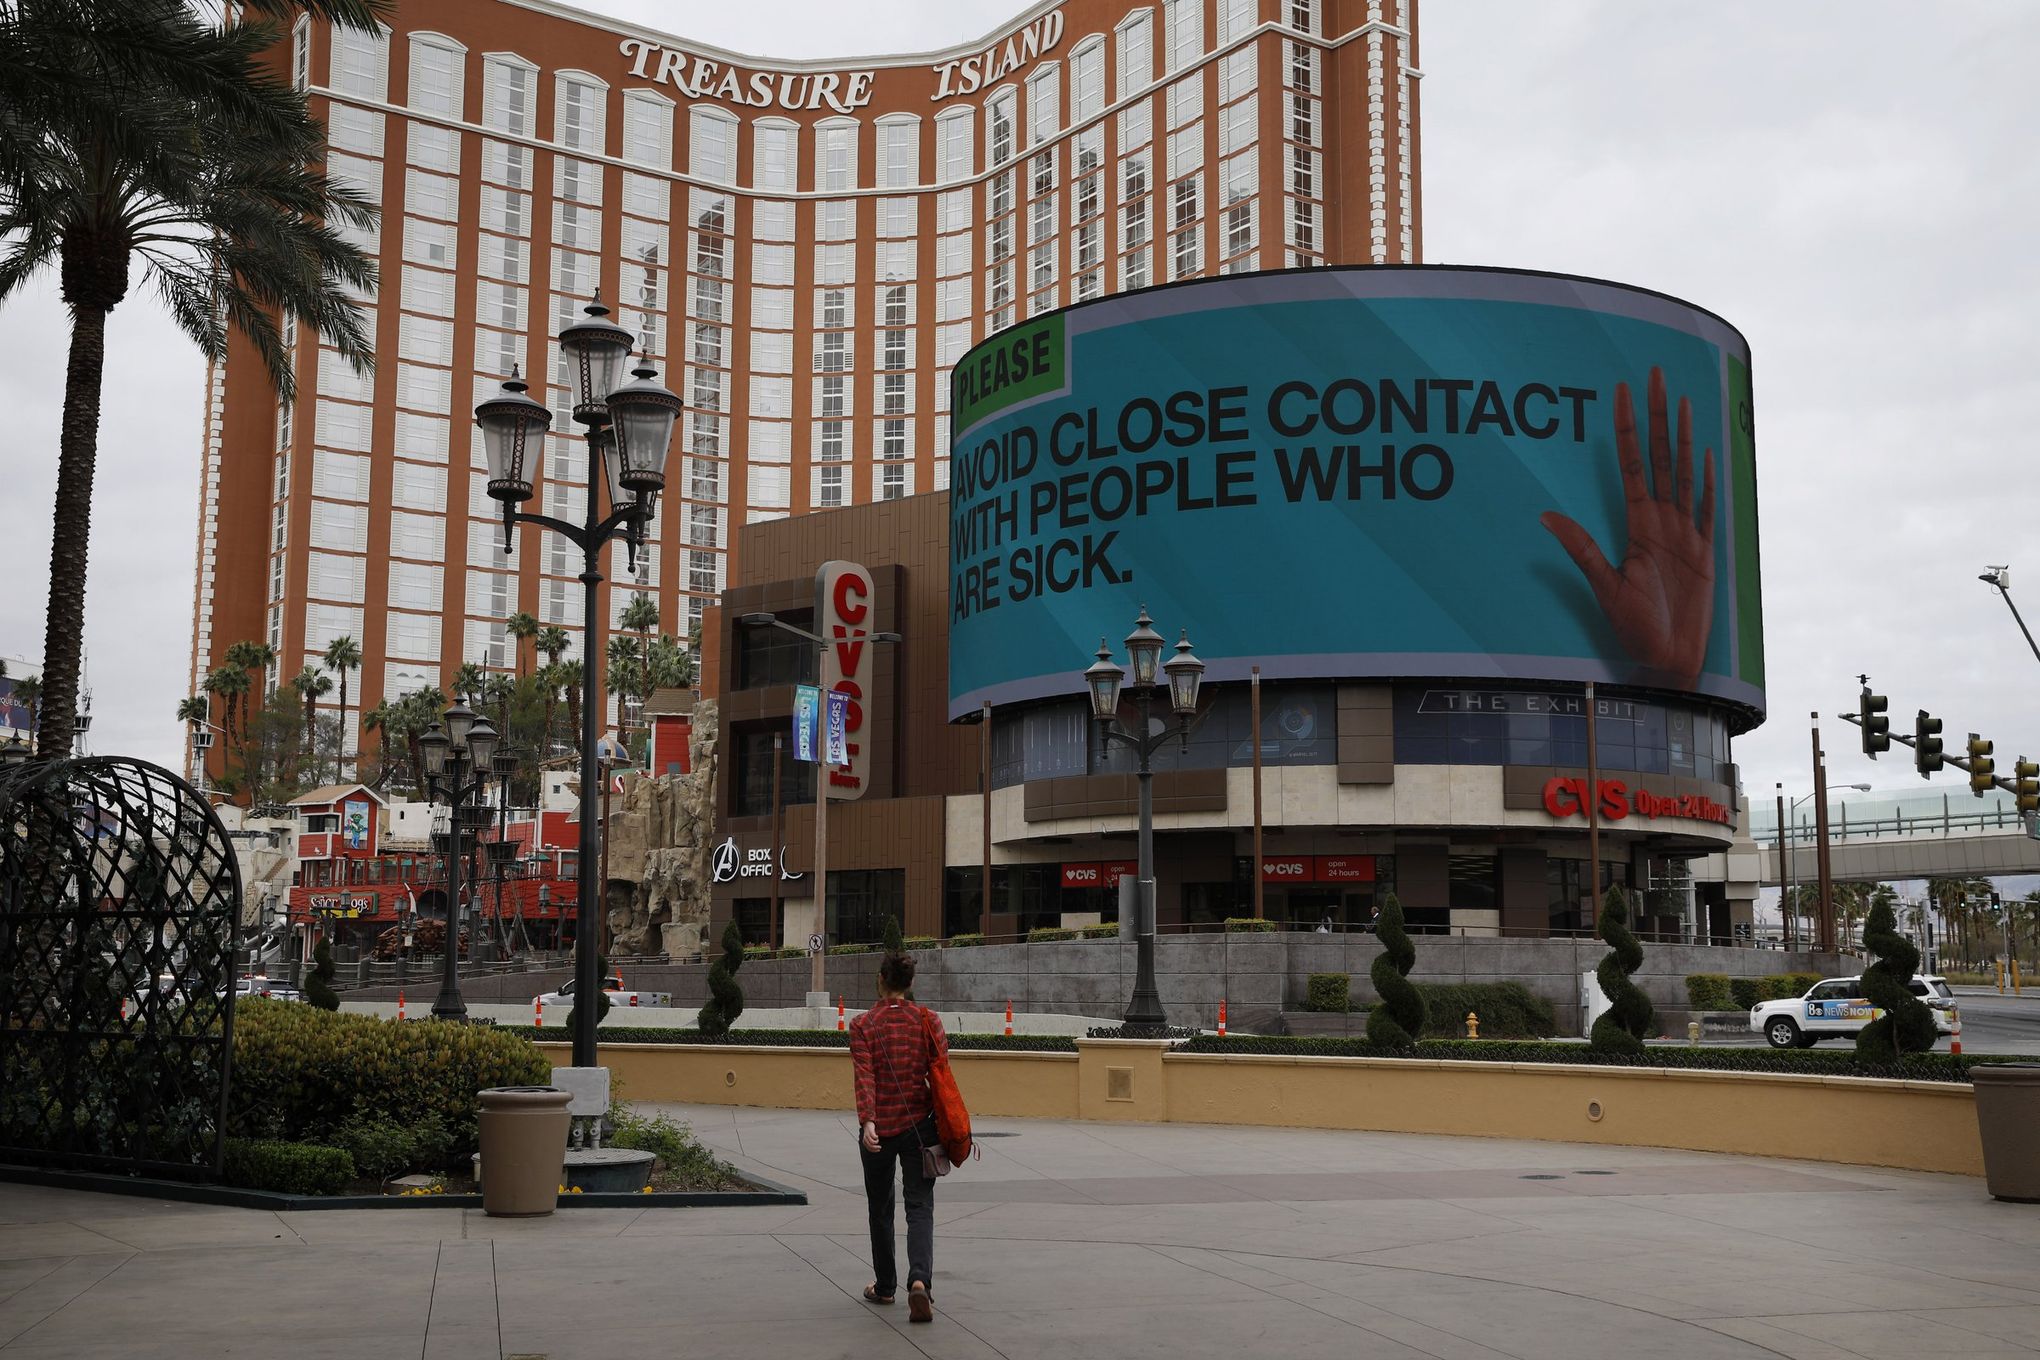 Popular venue off the Las Vegas Strip closes abruptly - TheStreet